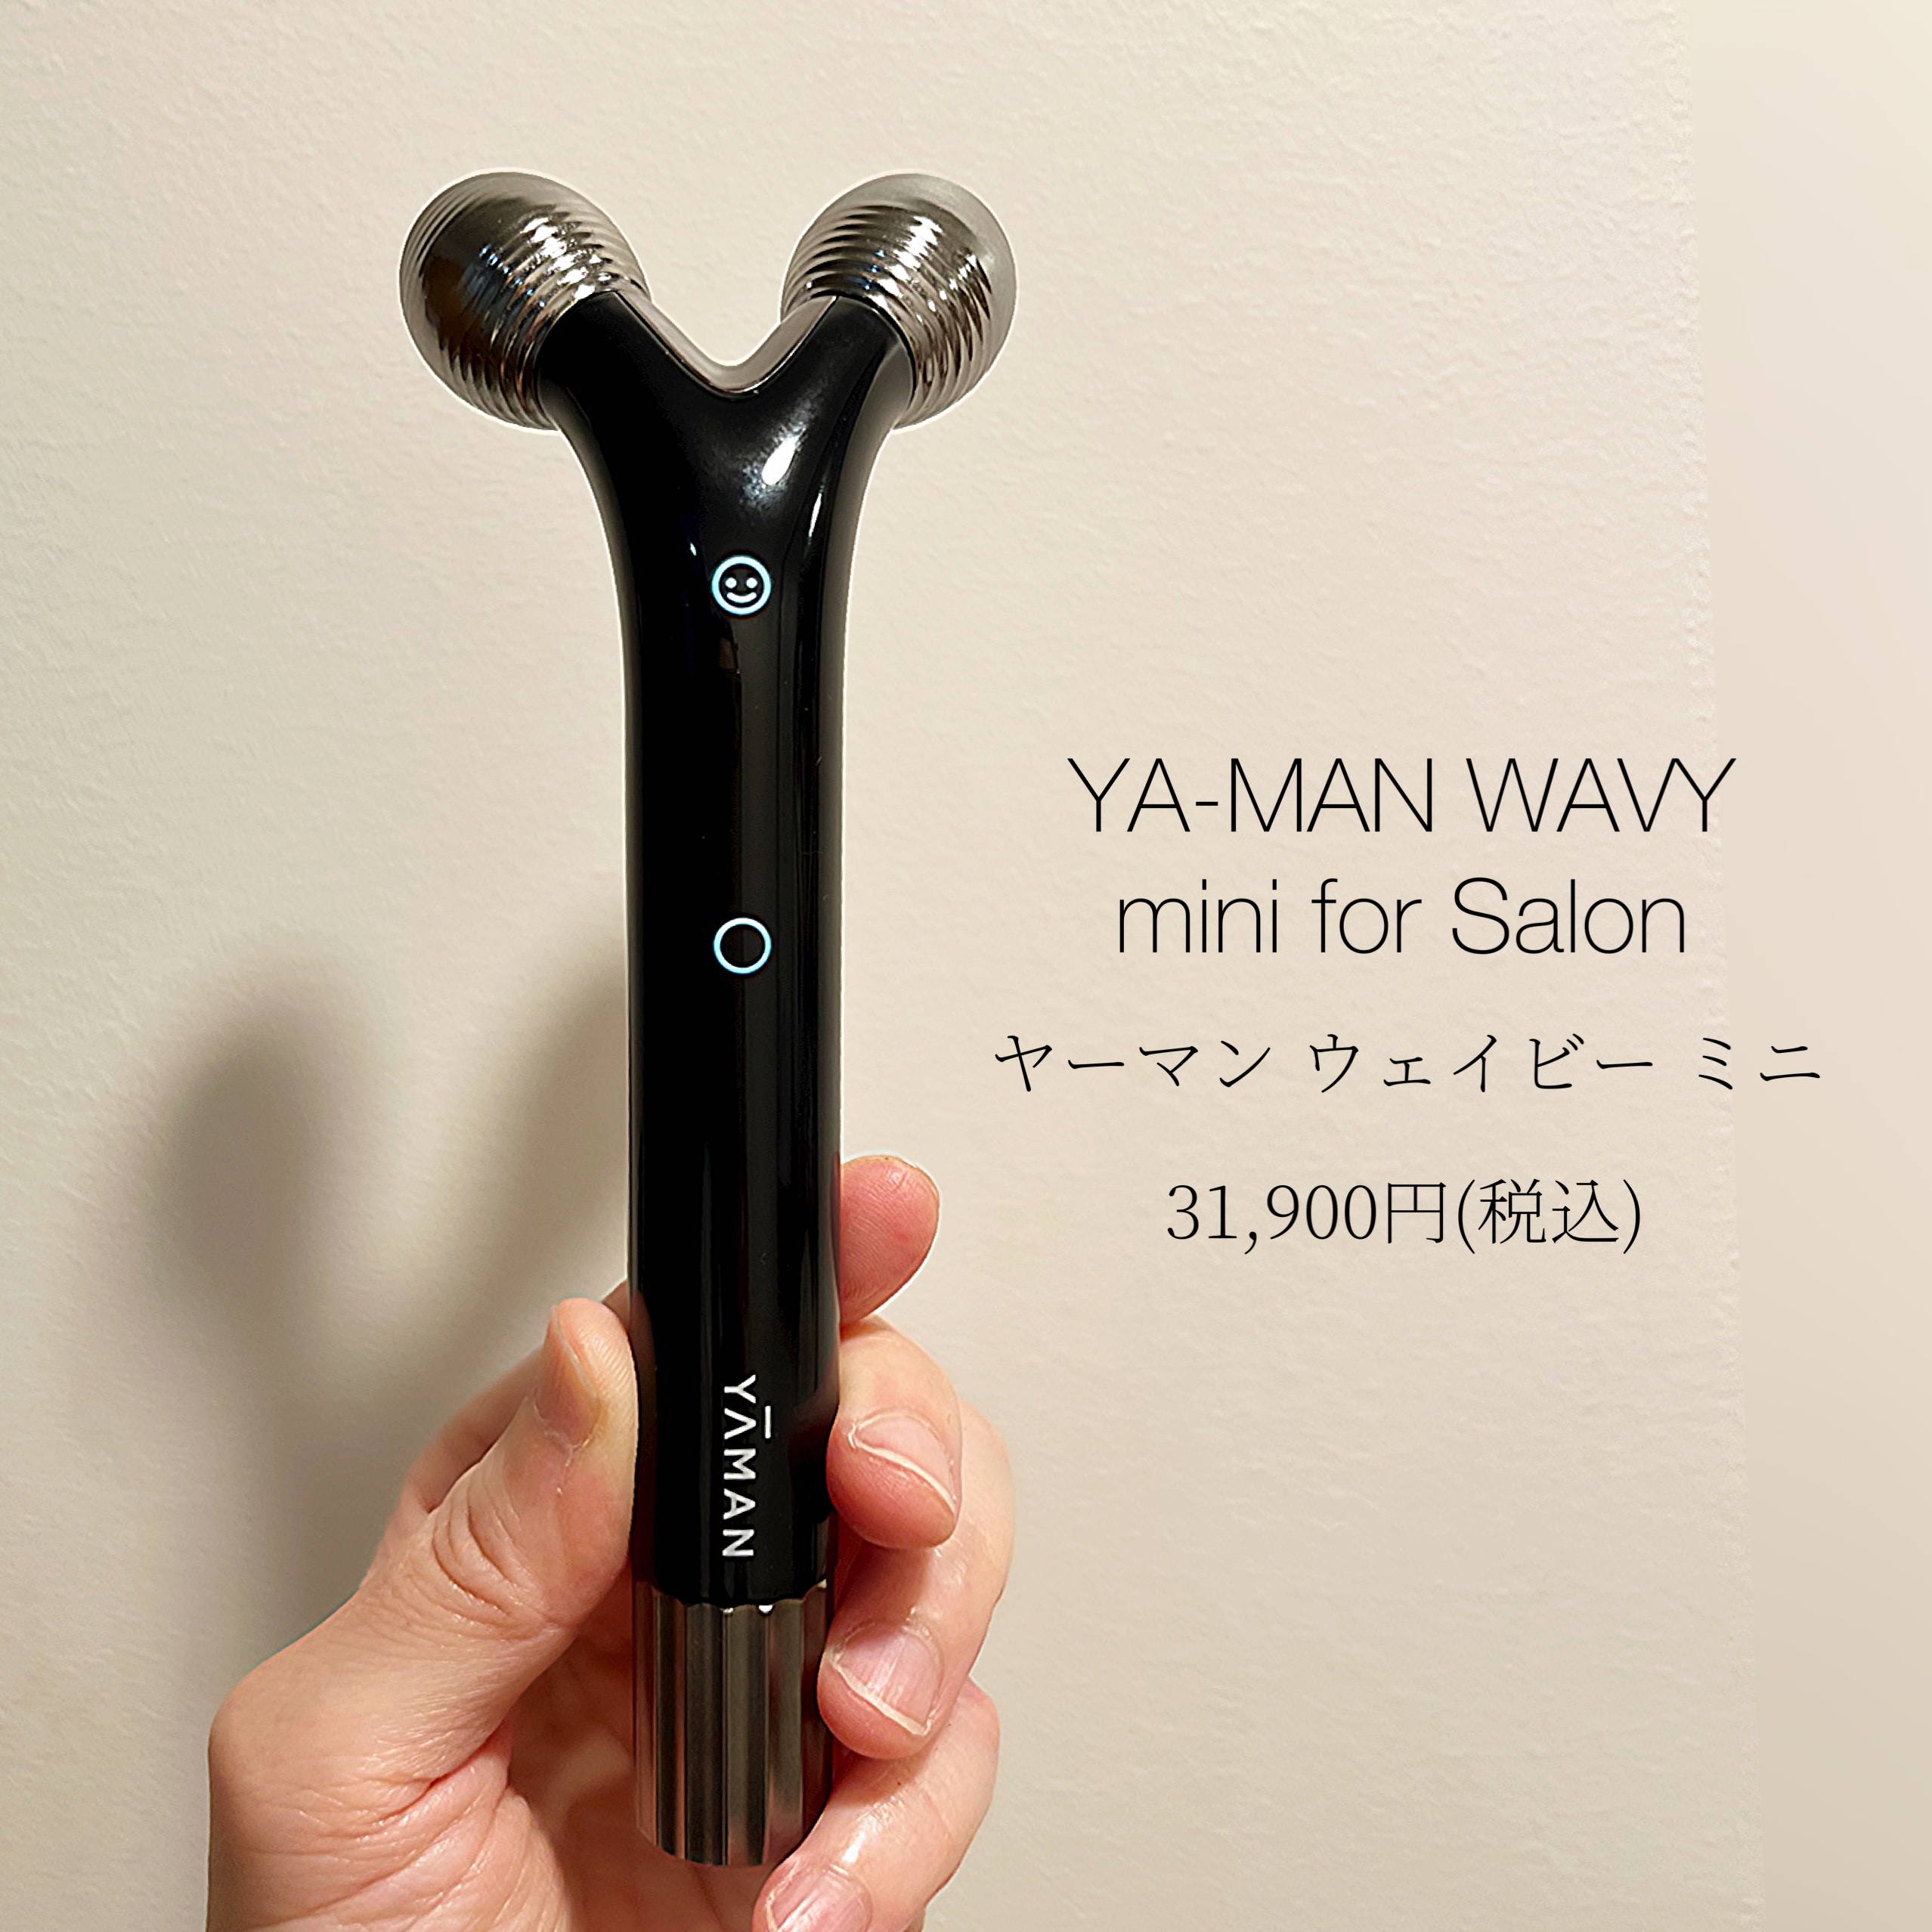 WAVYmini for Salon ウェイビーミニ ヤーマン 黒【正規品】-